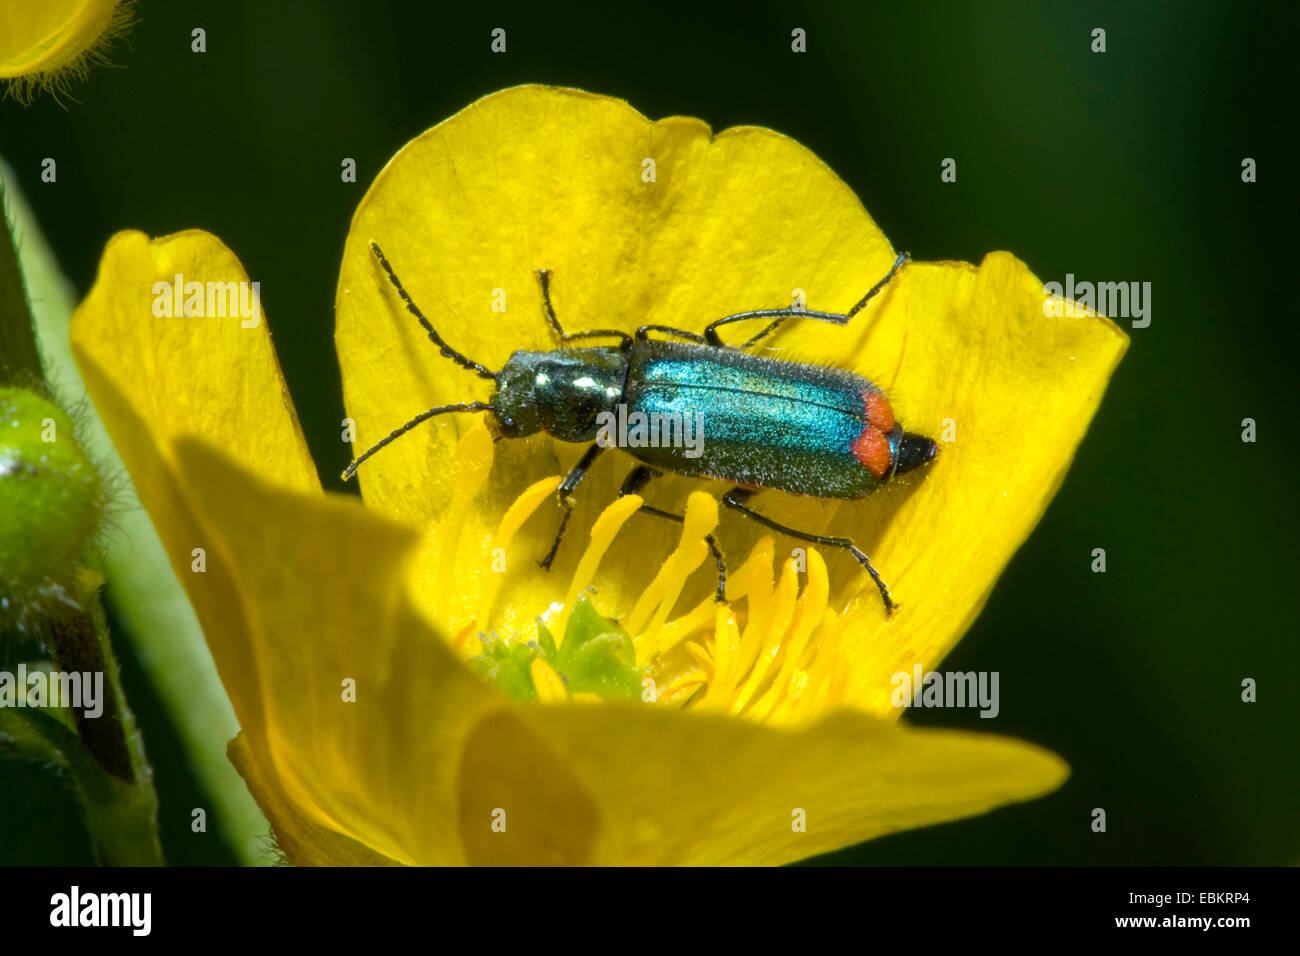 Red-tipped flower beetle (Malachius bipustulatus), sitting on yellow flower, Germany Stock Photo